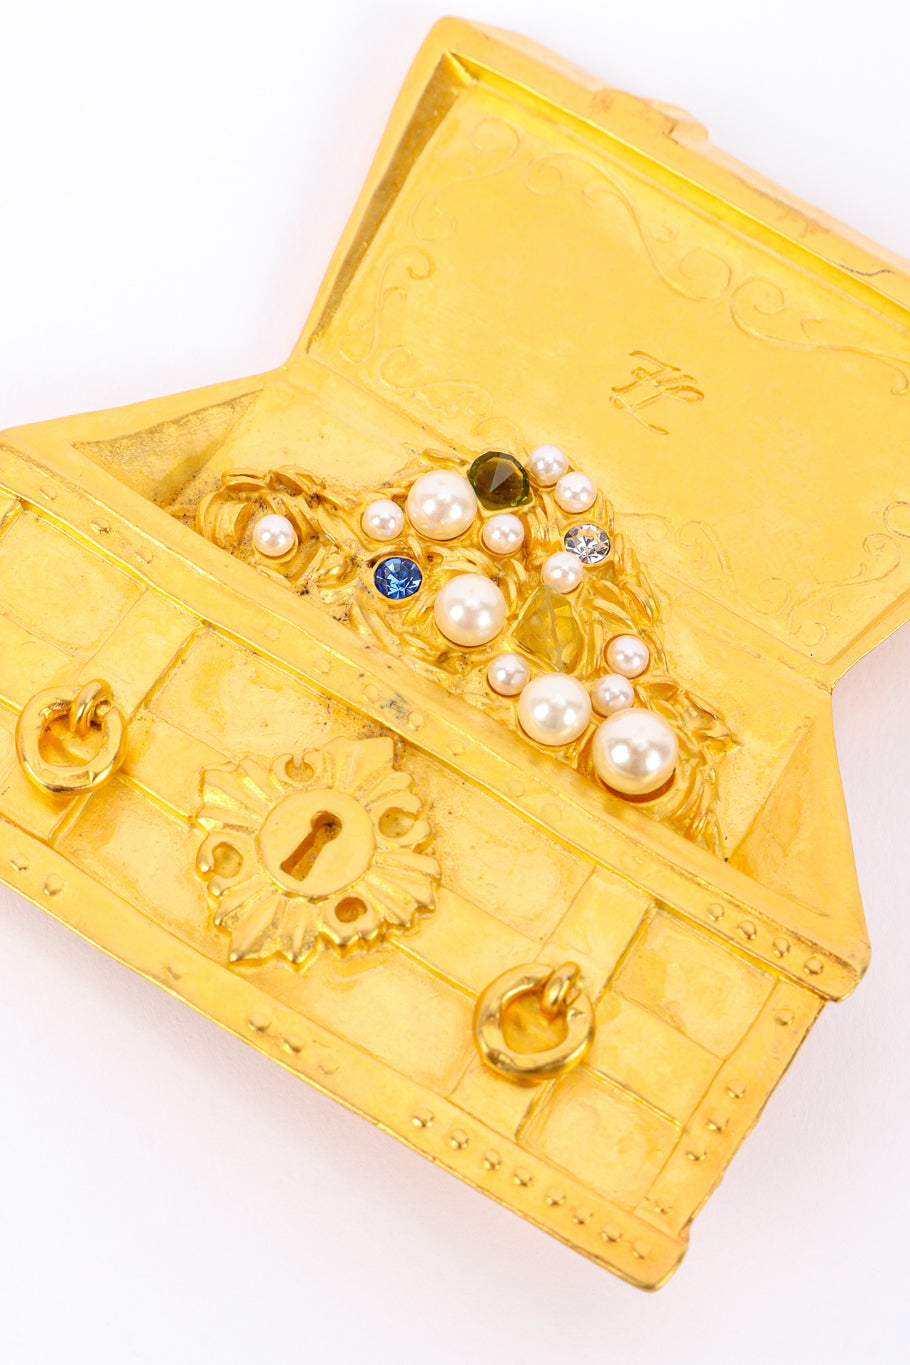 Vintage Karl Lagerfeld Treasure Chest Brooch jewel closeup @recessla